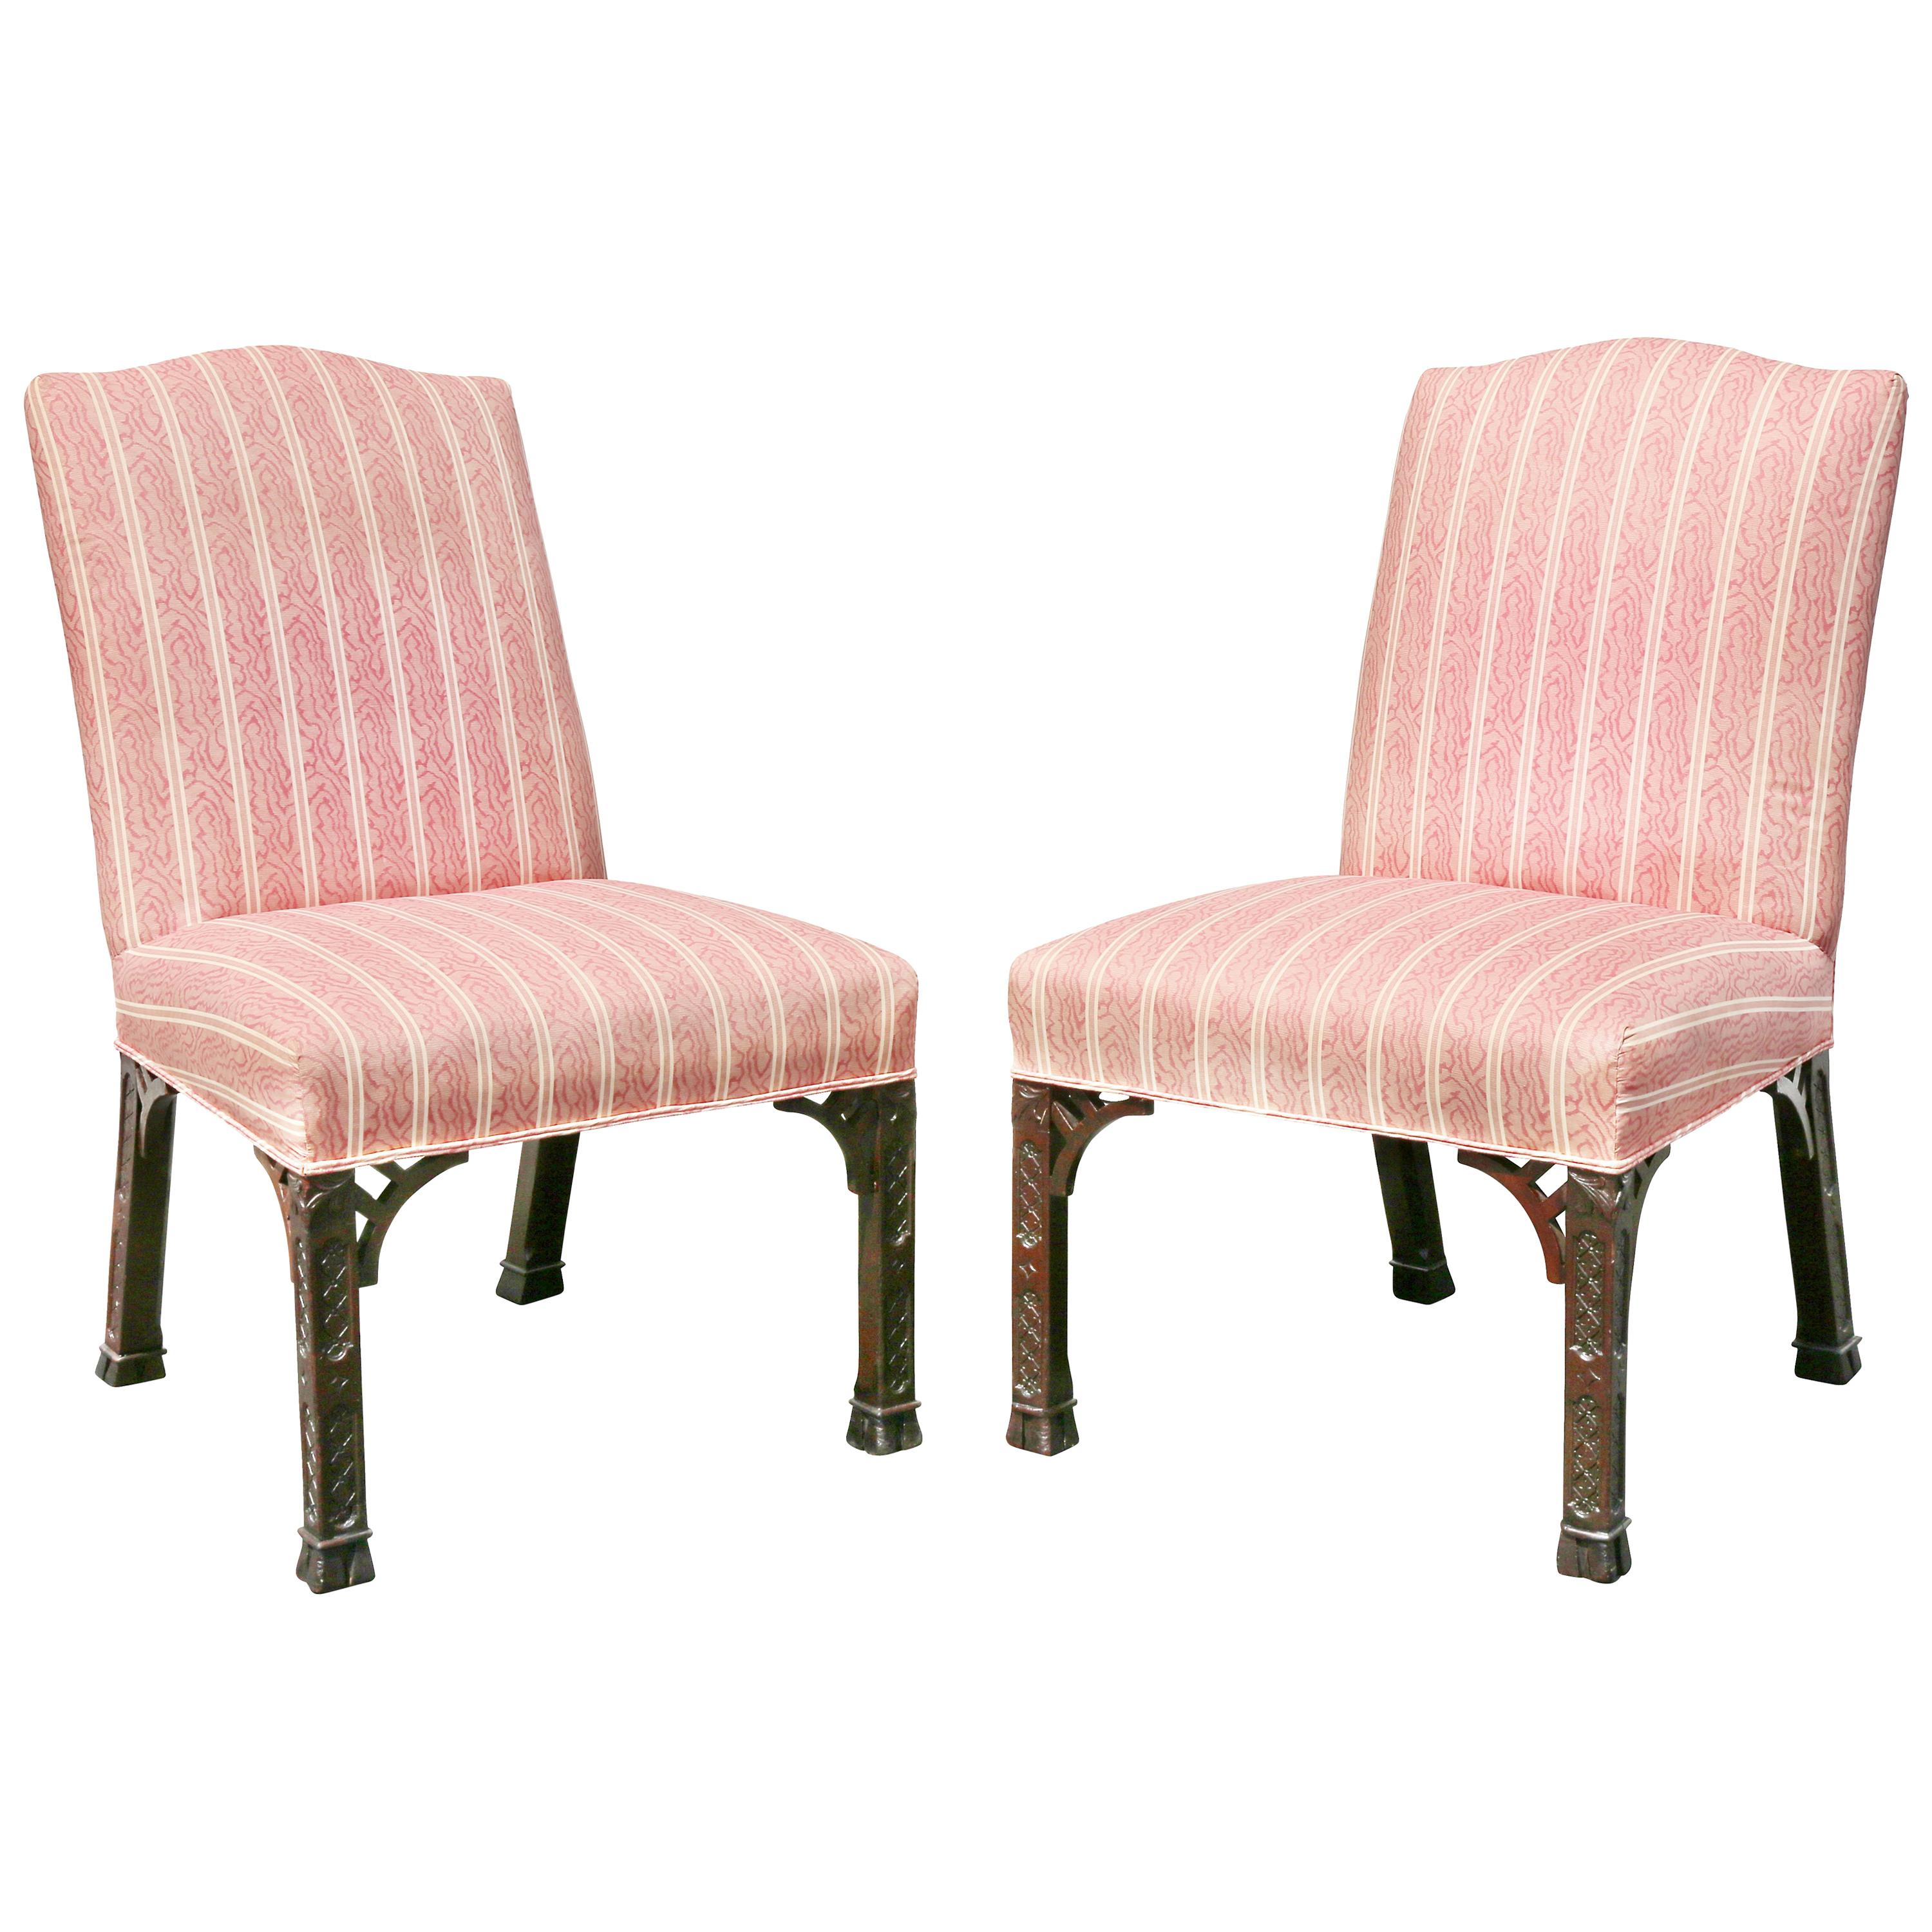 Pair of George III Mahogany Side Chairs